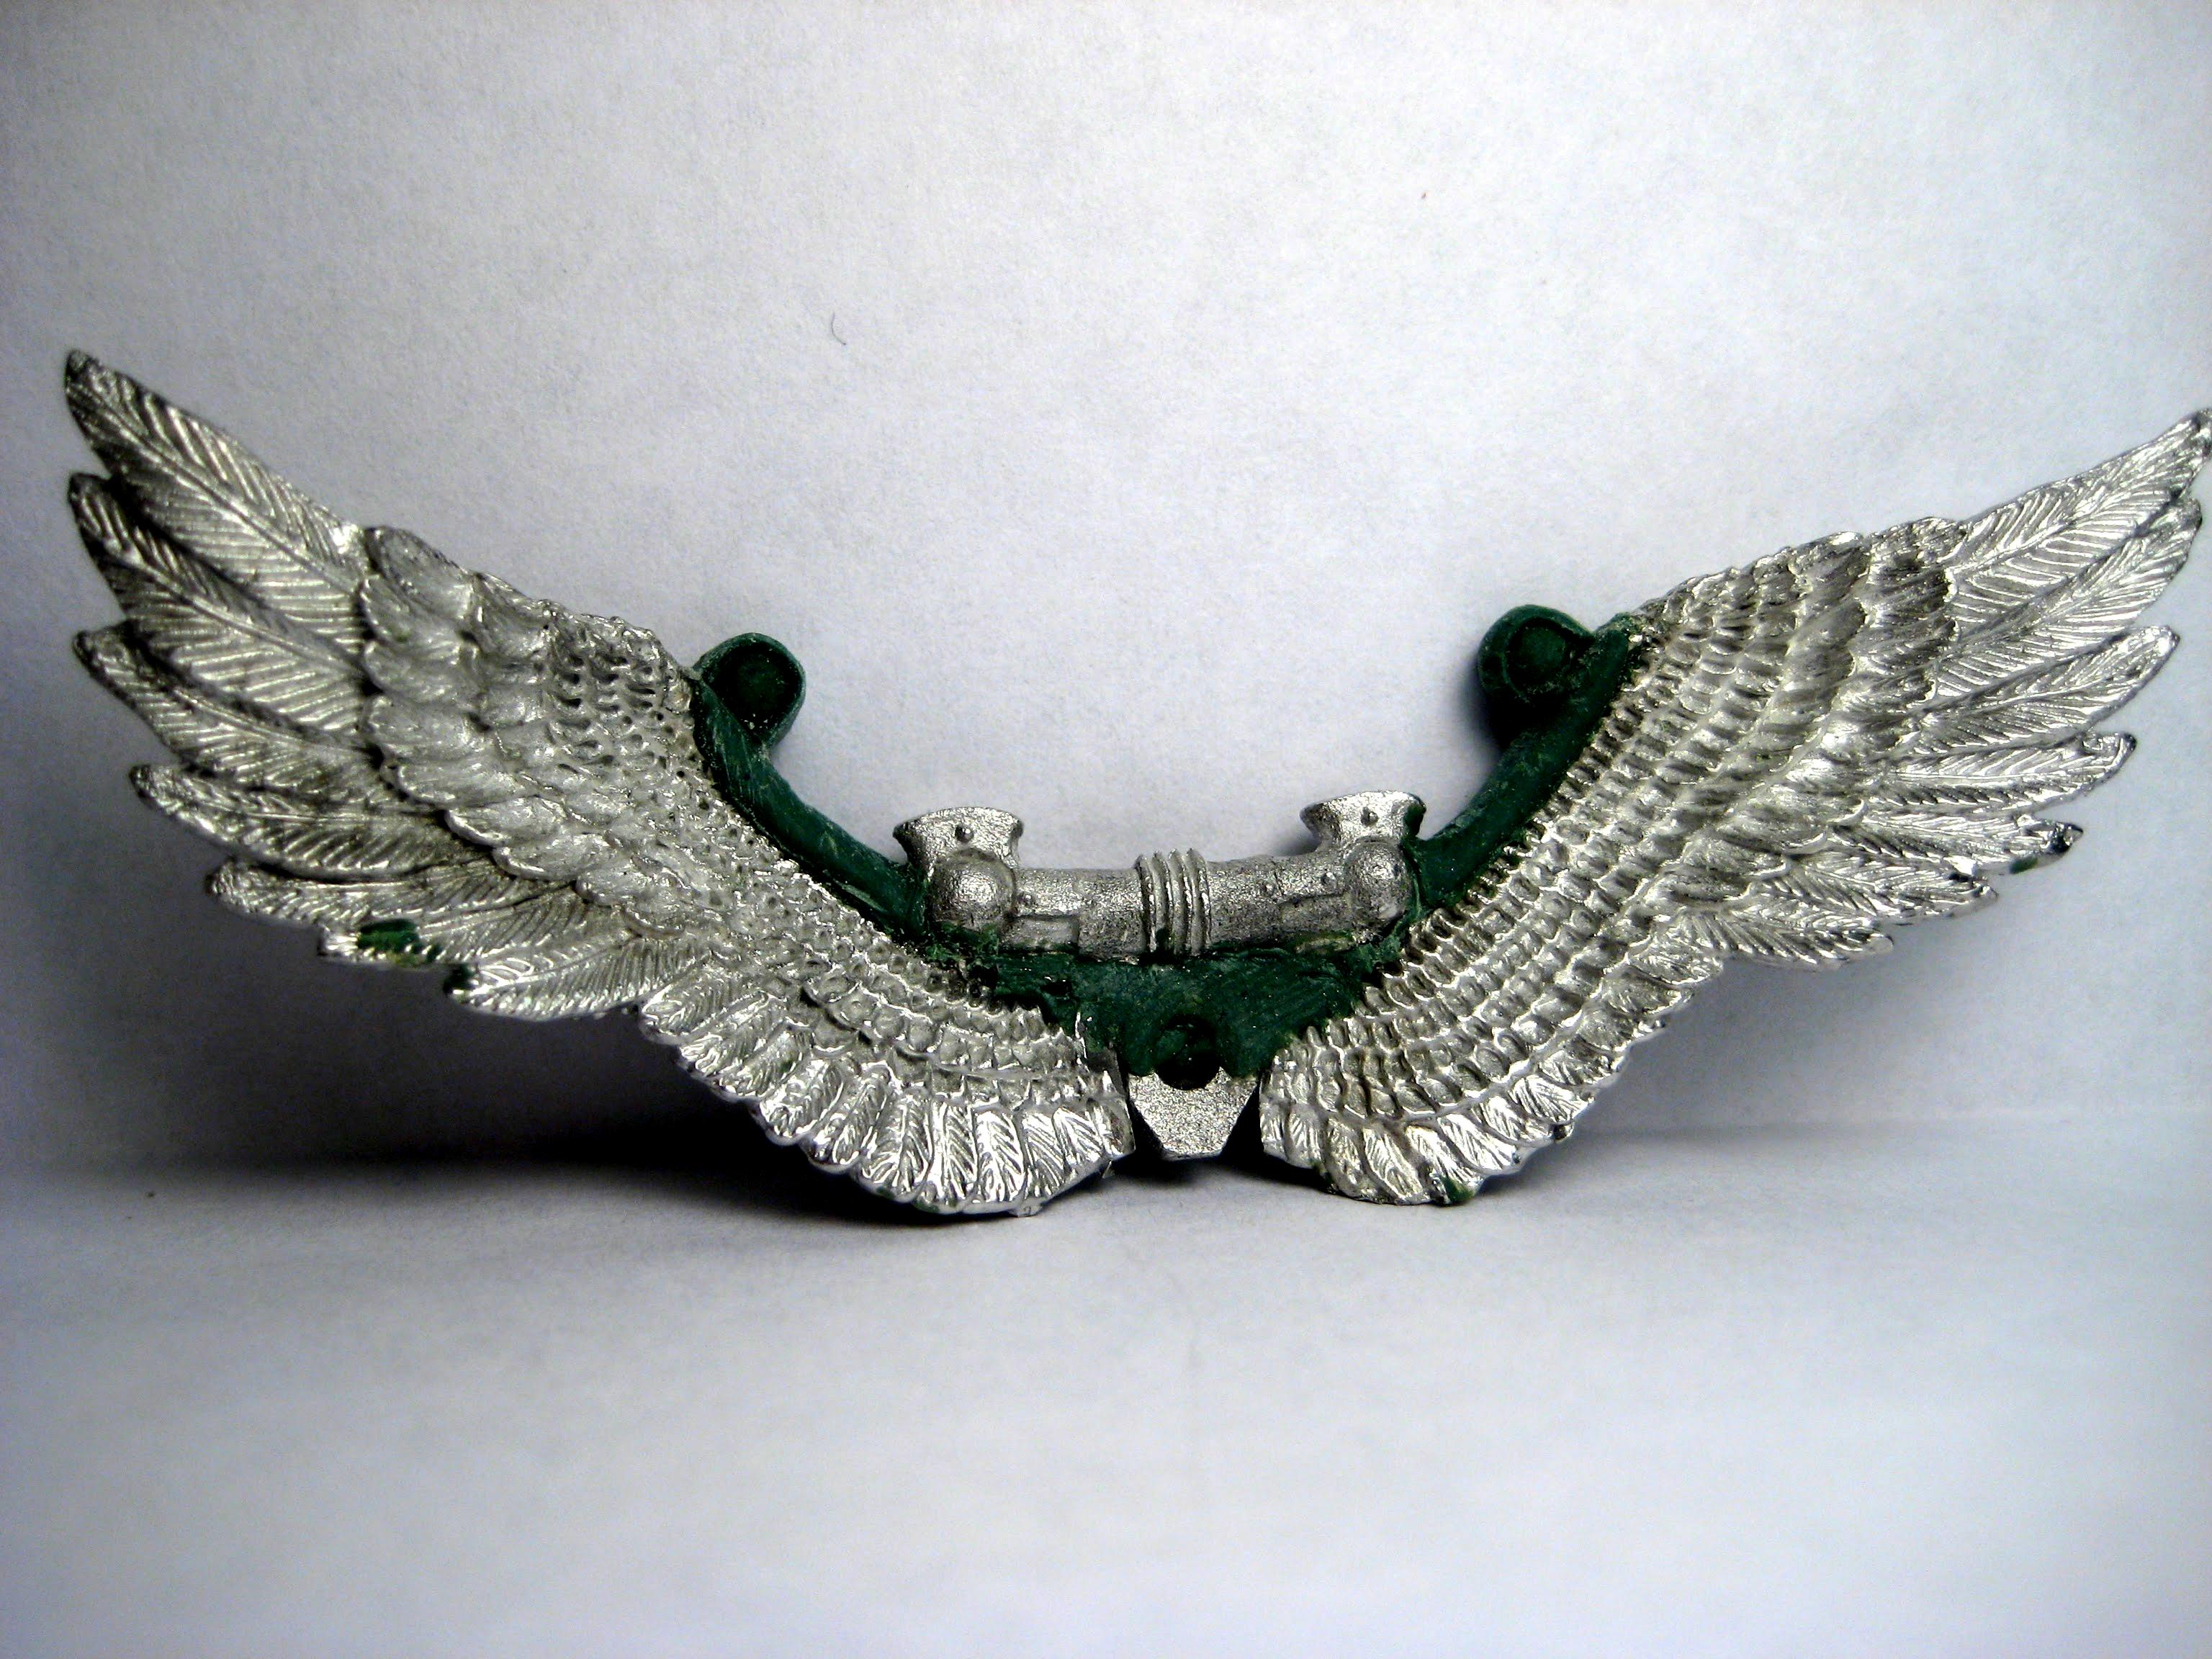 Celestine's wings, front